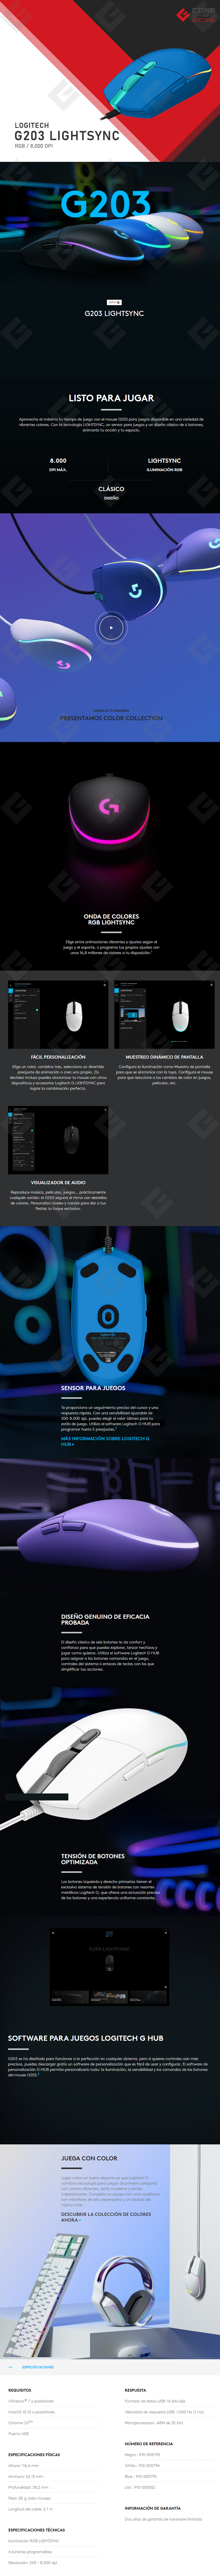 Mouse Logitech G203 Lightsync Azul, Alámbrico, 8,000 DPI - 910-005795